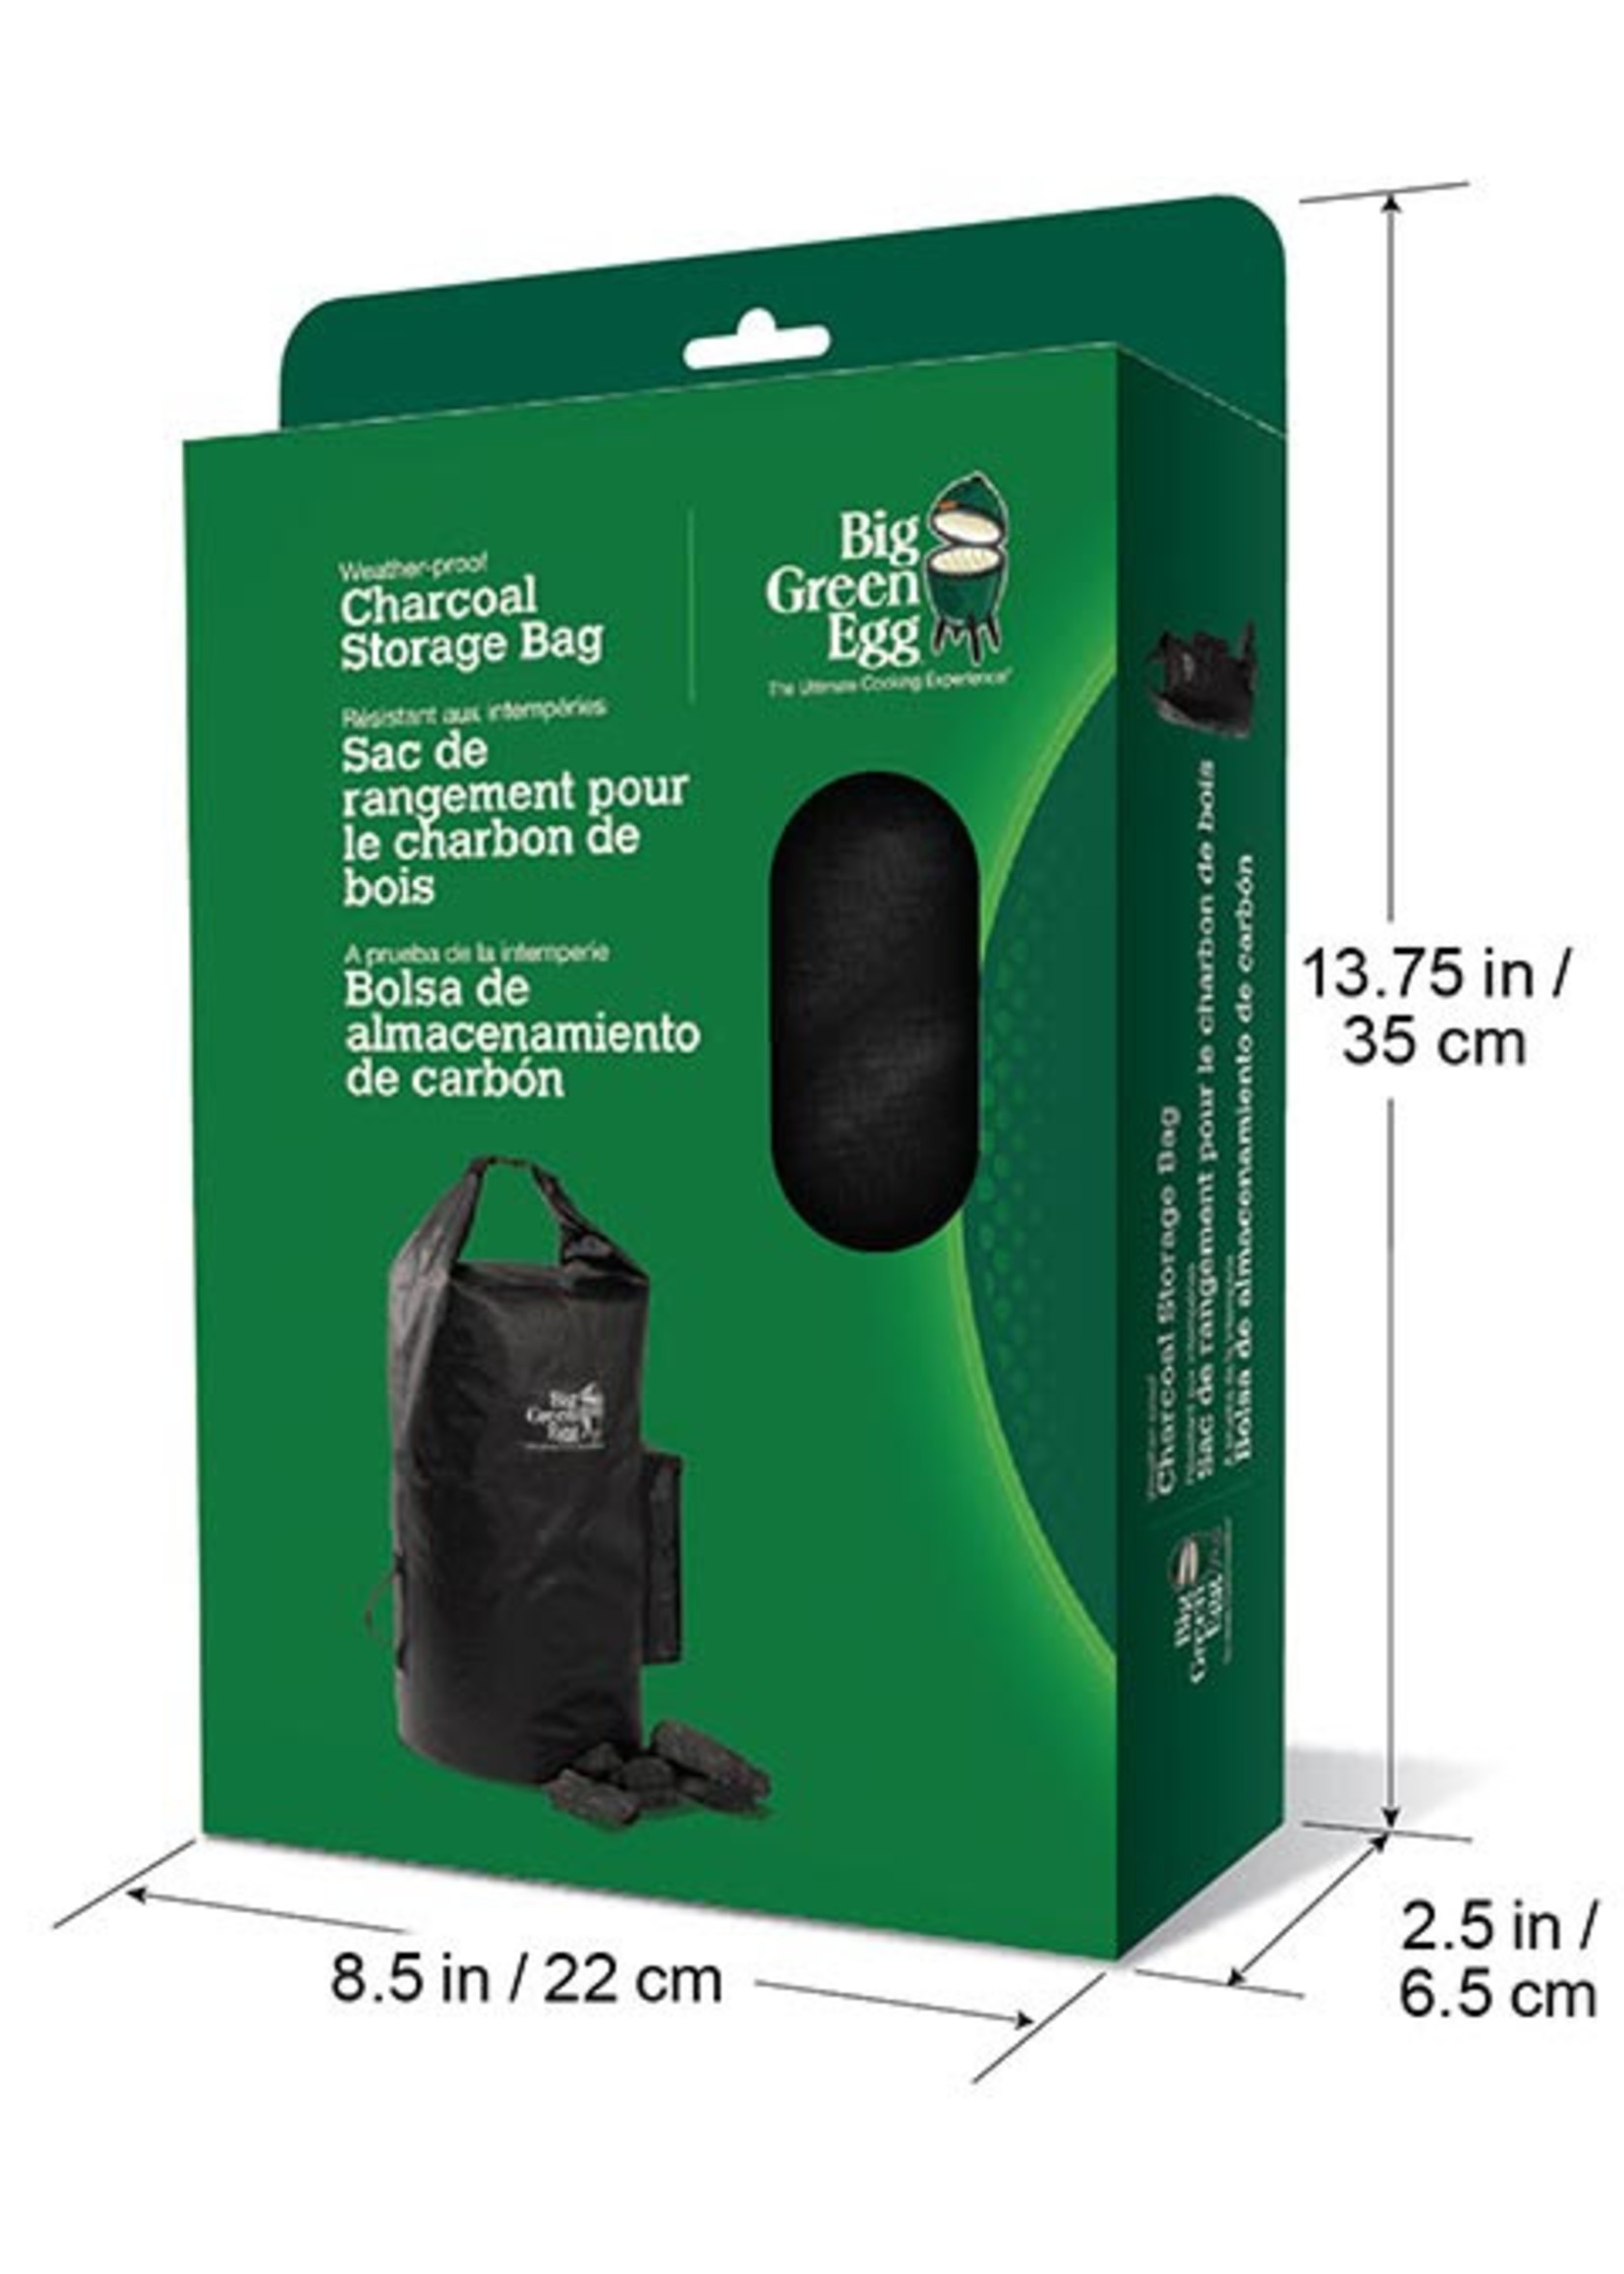 Big Green Egg BGE Weather-Proof Charcoal Storage Bag